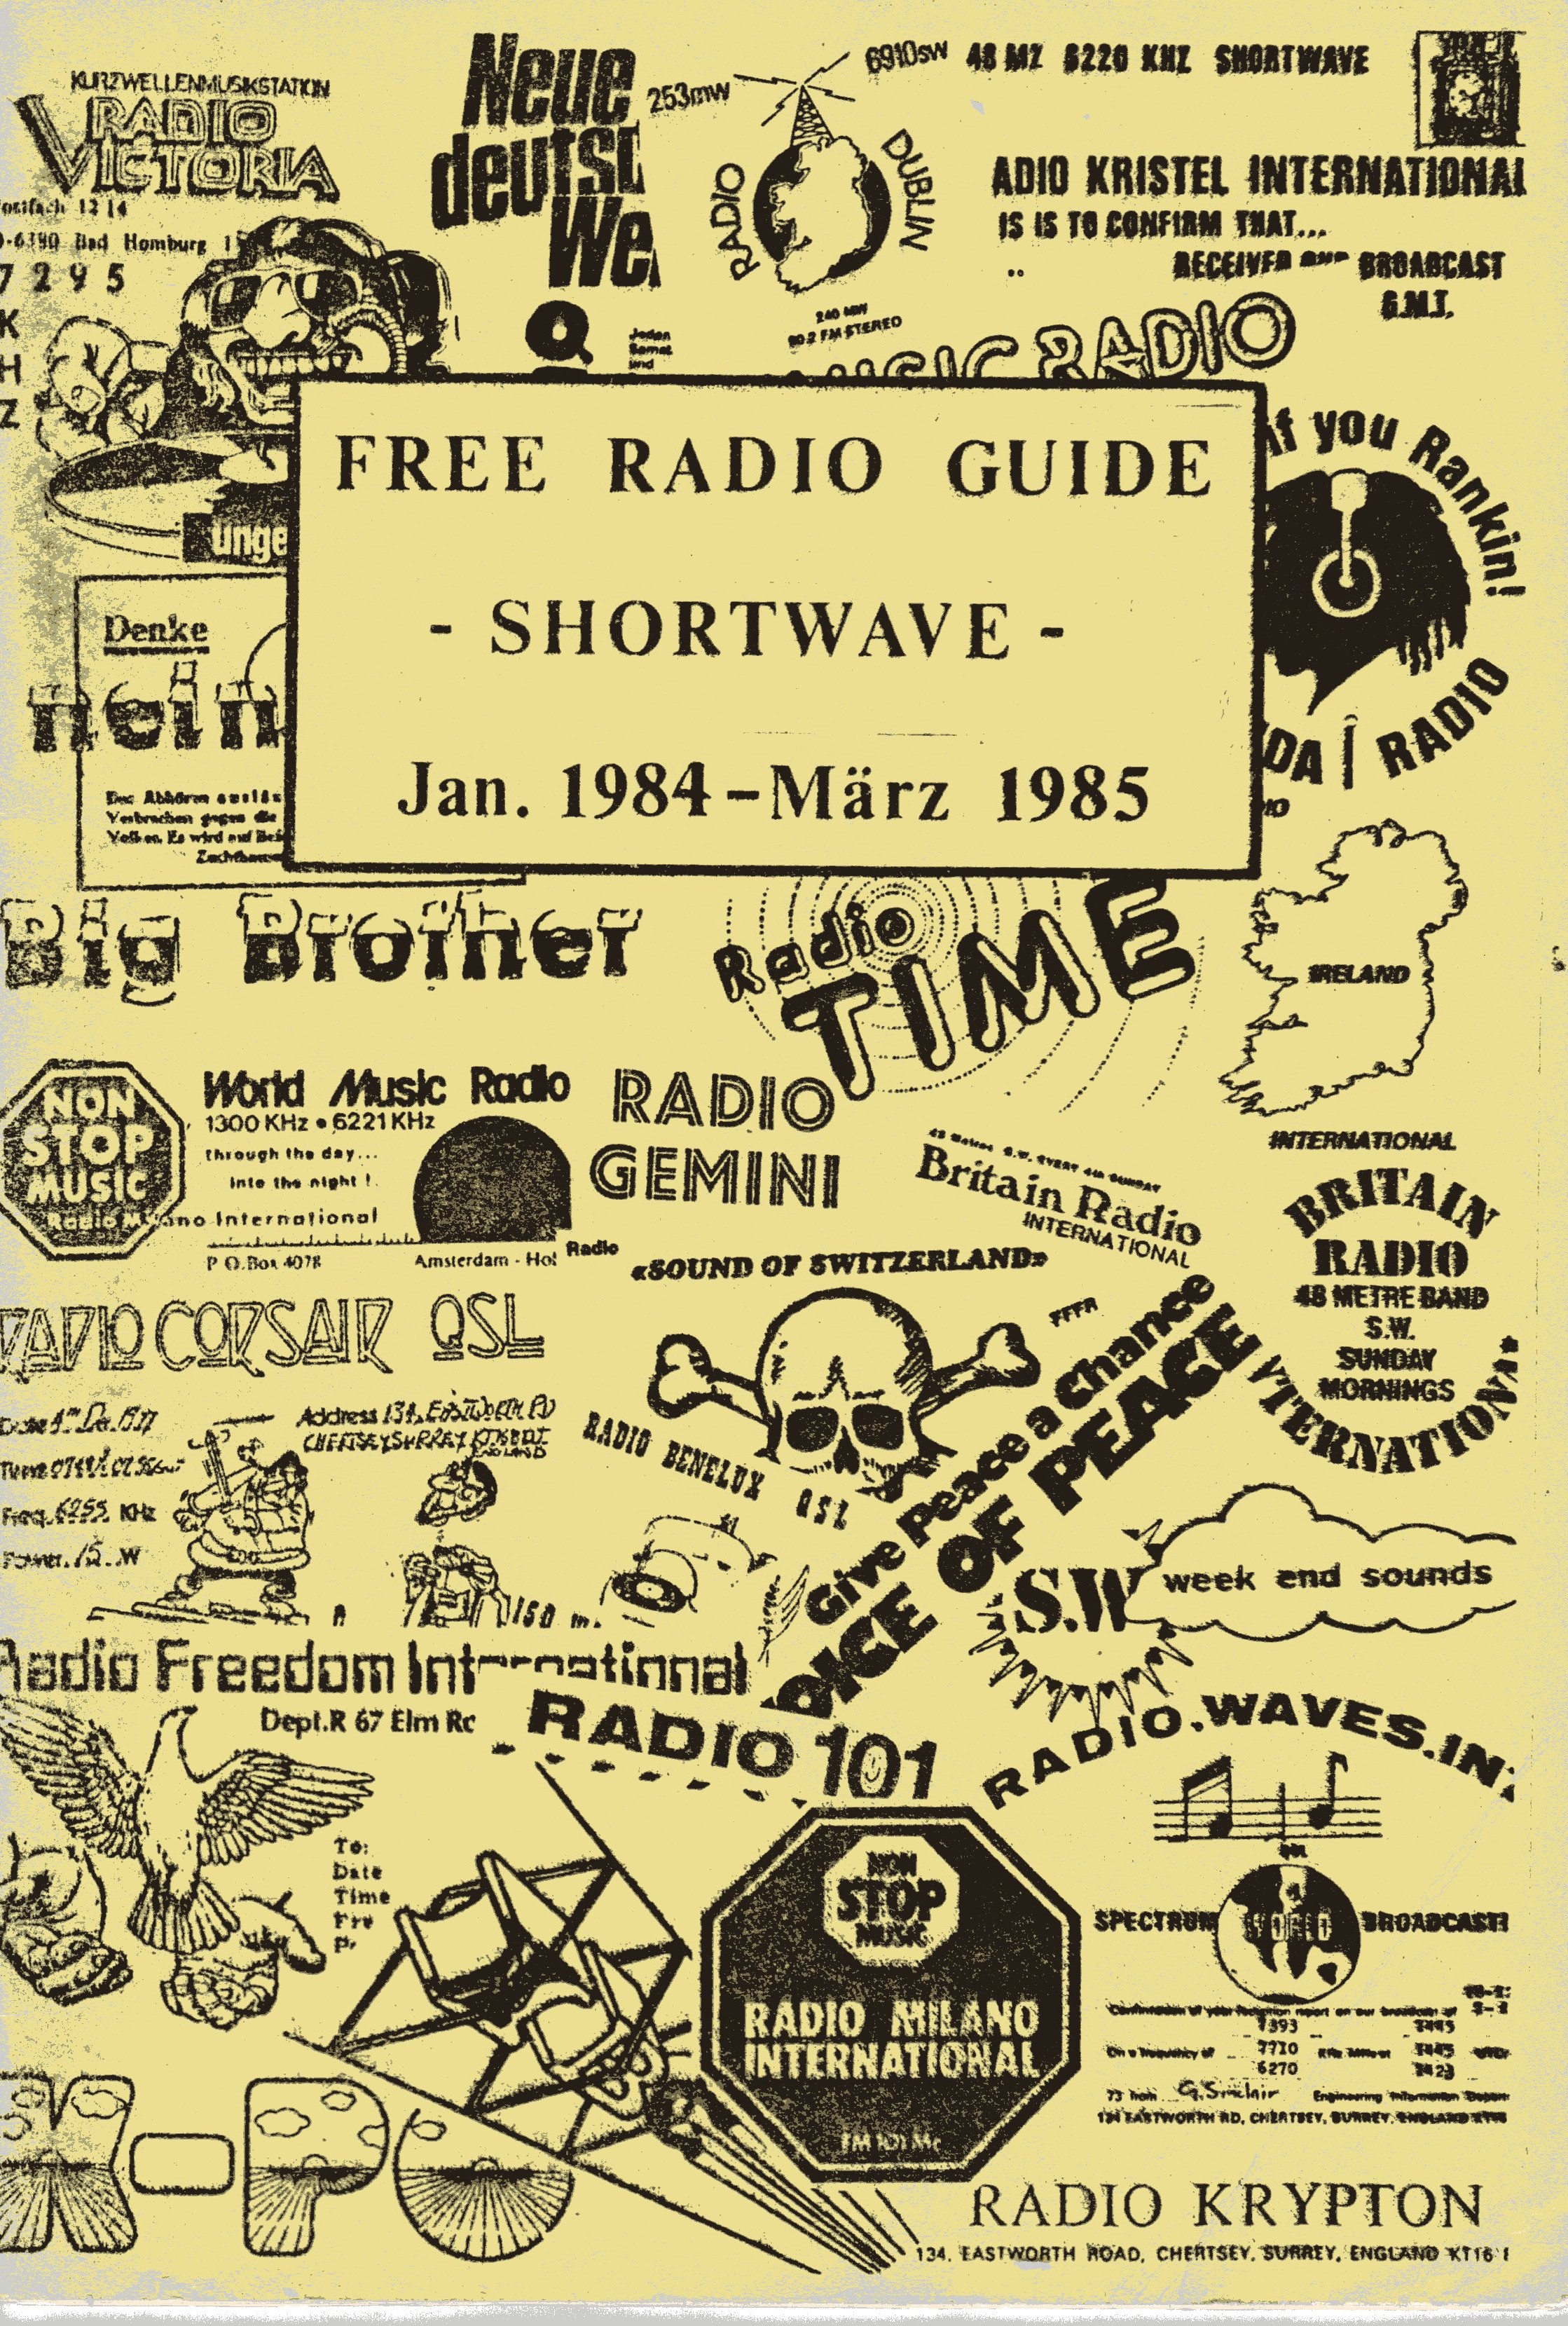 Free Radio Guide
Shortwave